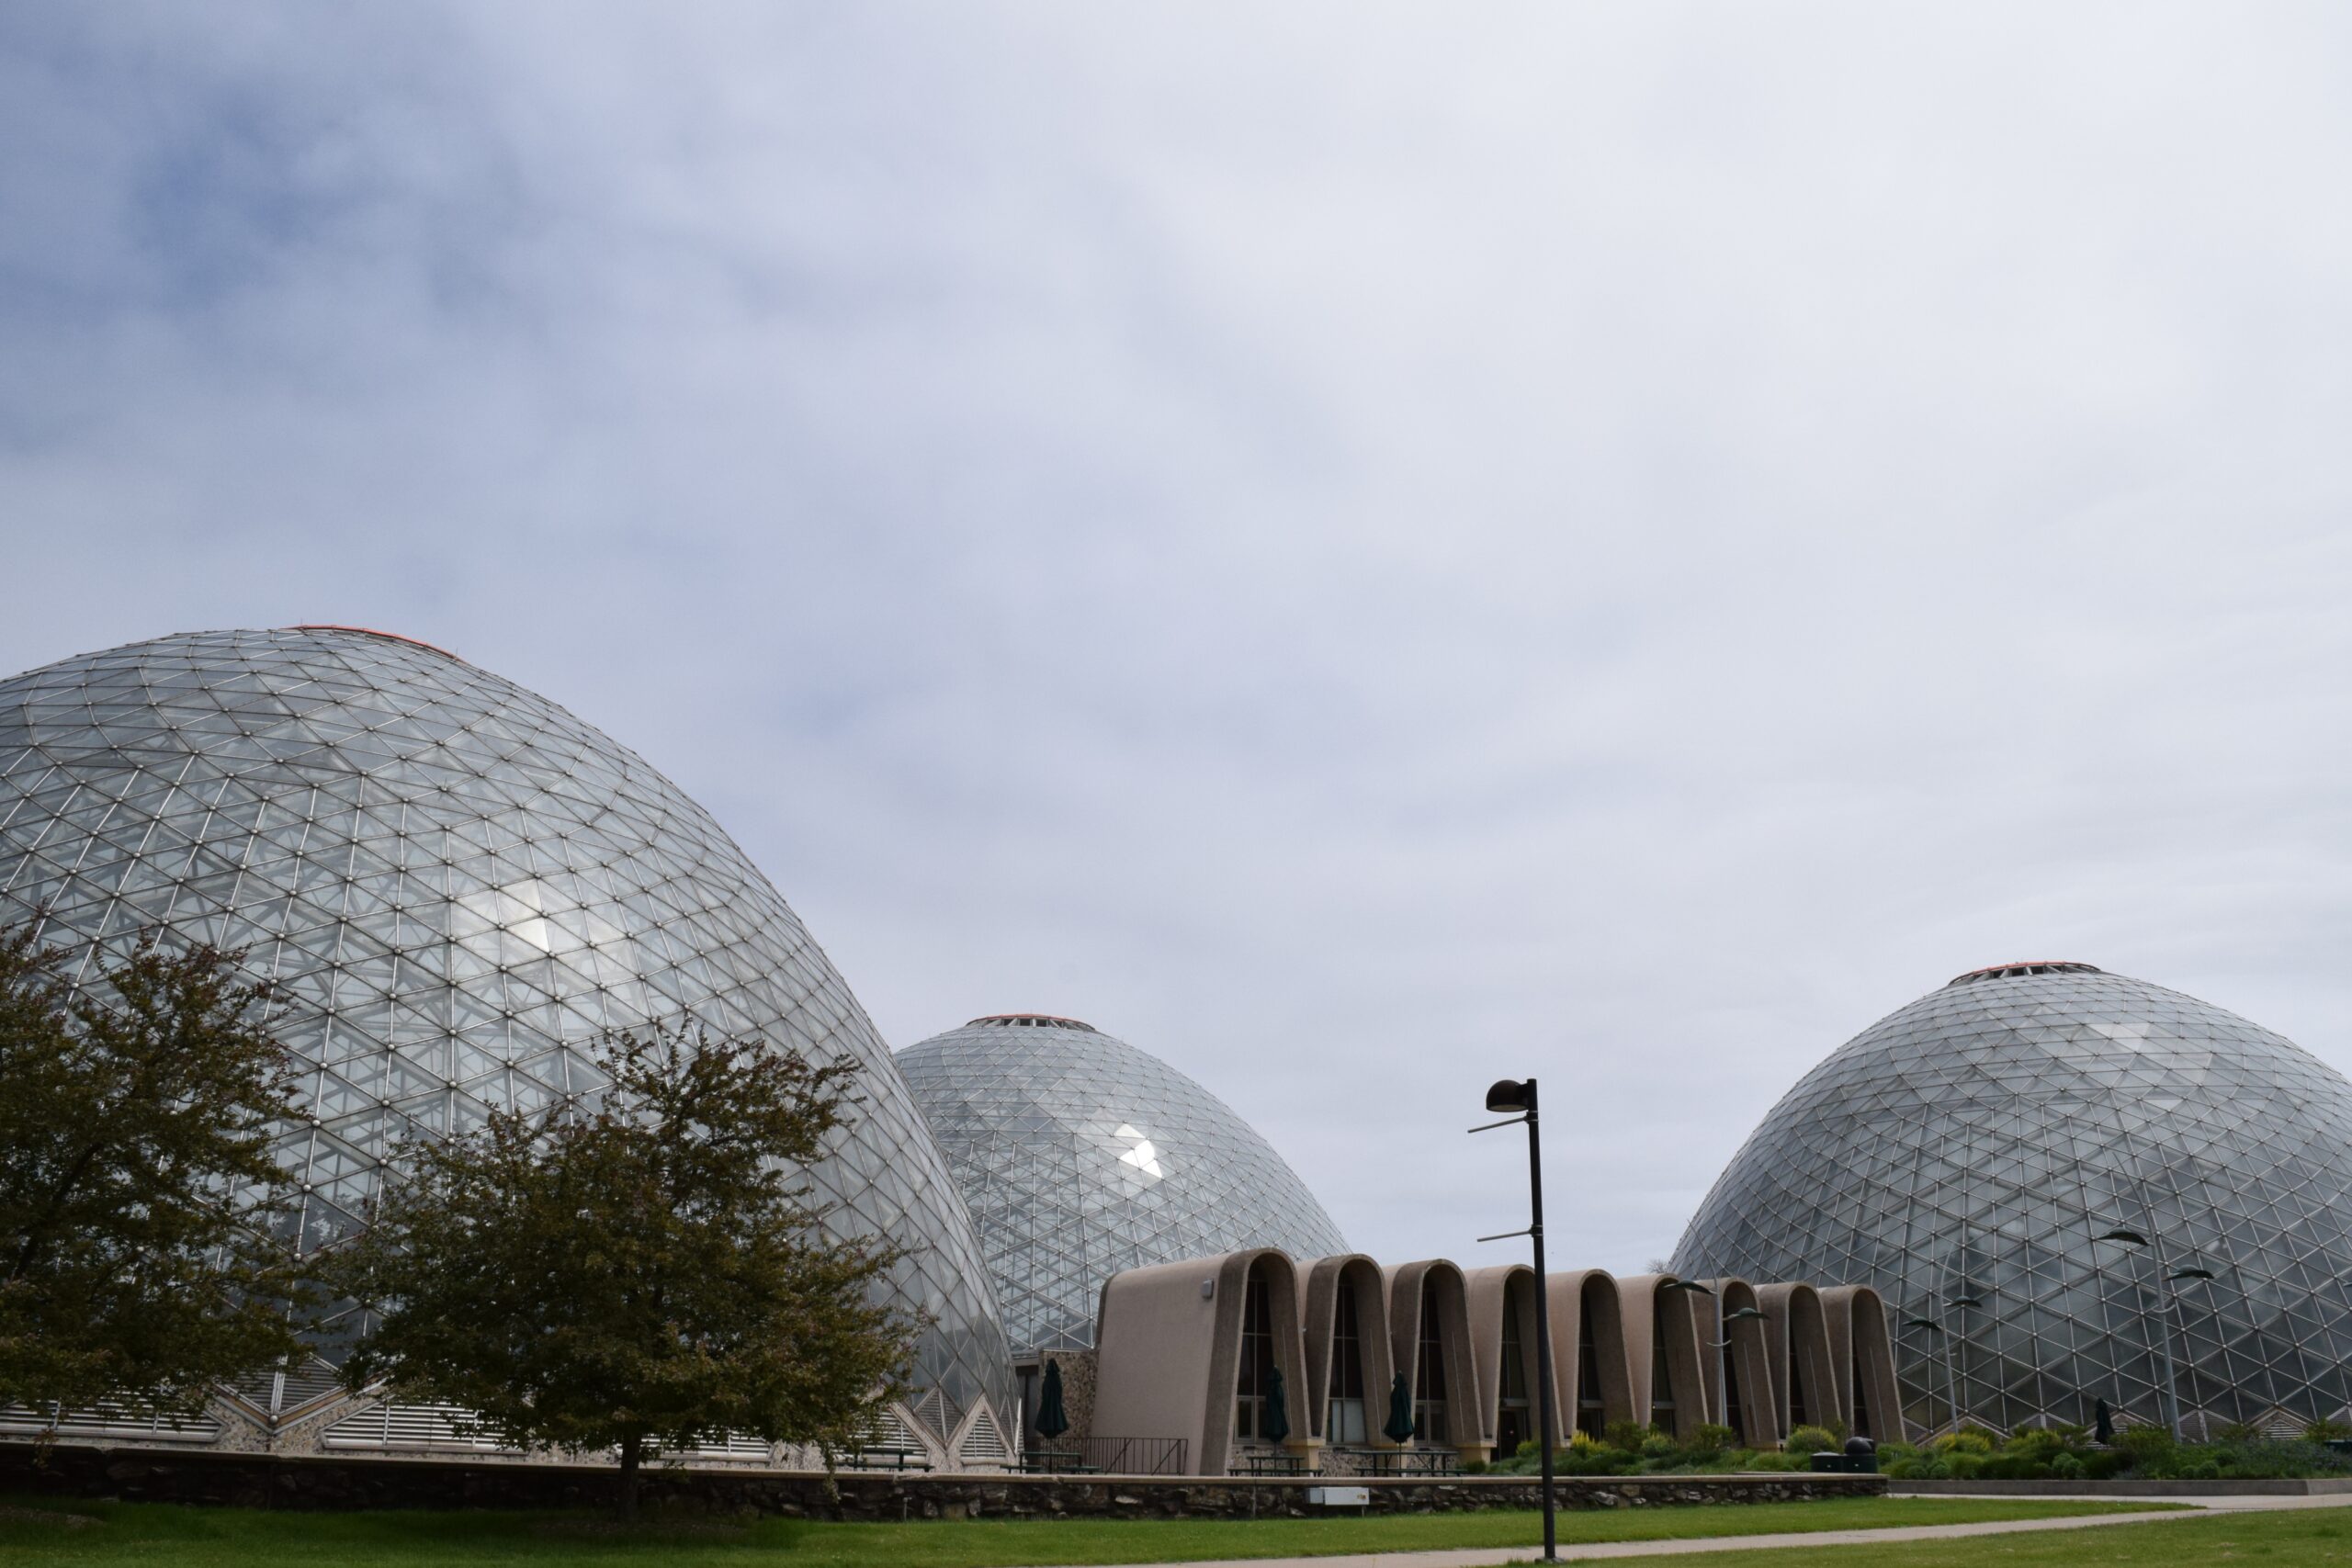 Mitchell Park Conservatory, Milwaukee, Domes